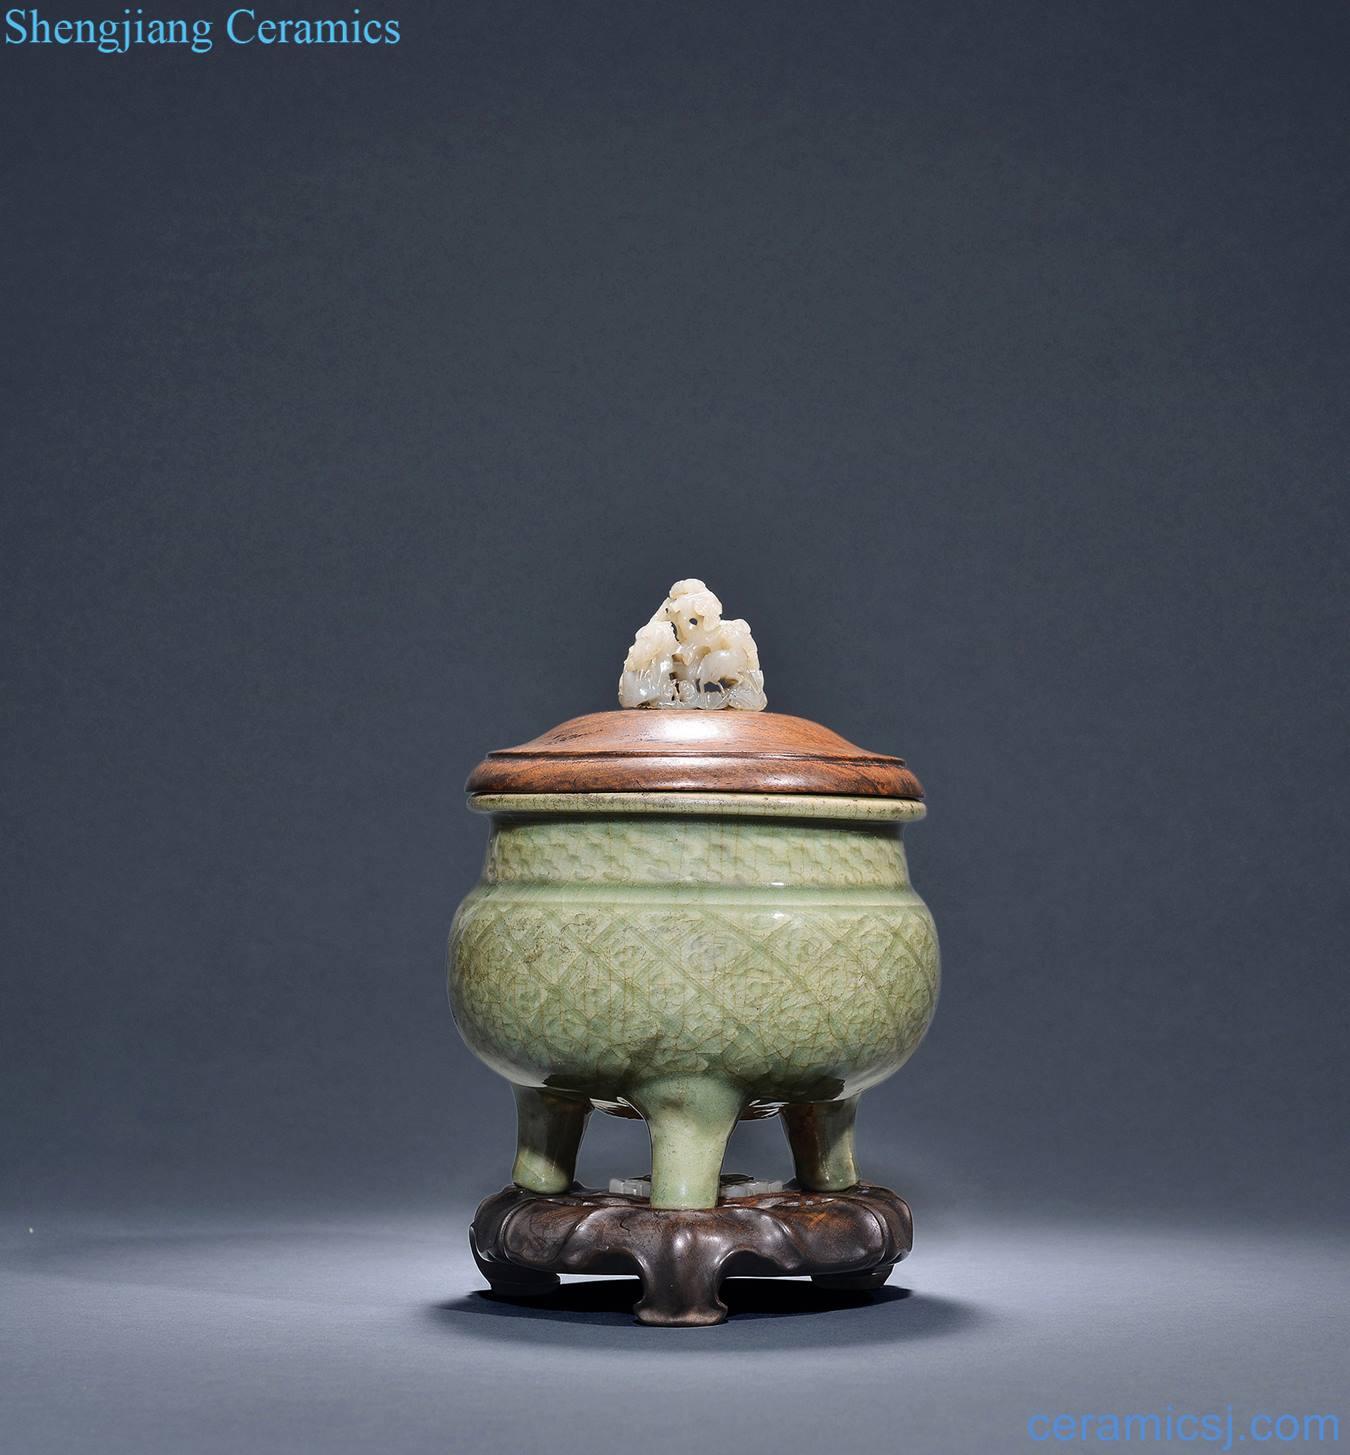 Ming dynasty Longquan celadon brocade furnace with three legs